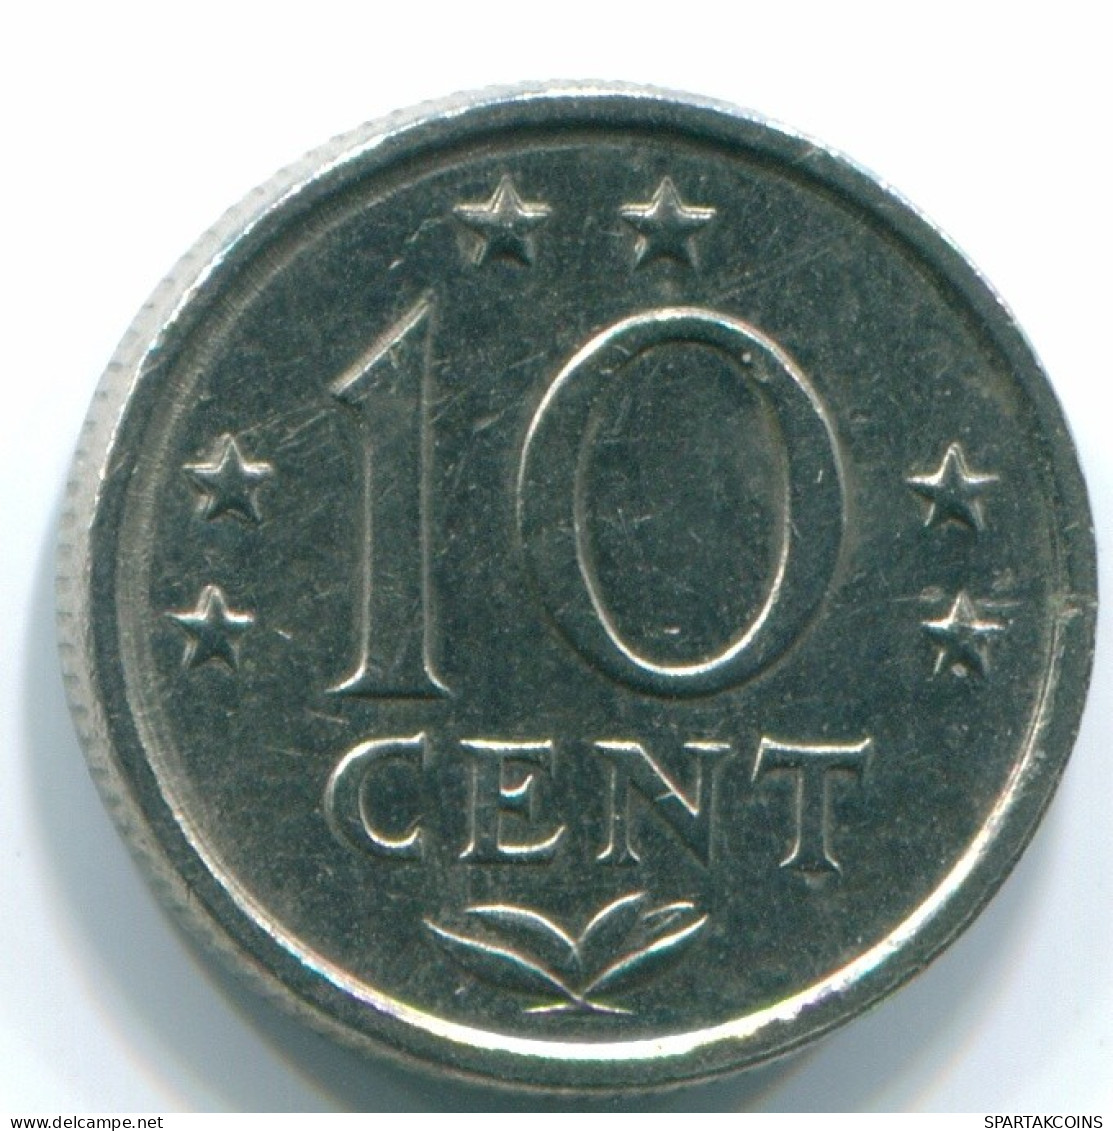 10 CENTS 1978 NIEDERLÄNDISCHE ANTILLEN Nickel Koloniale Münze #S13553.D.A - Netherlands Antilles